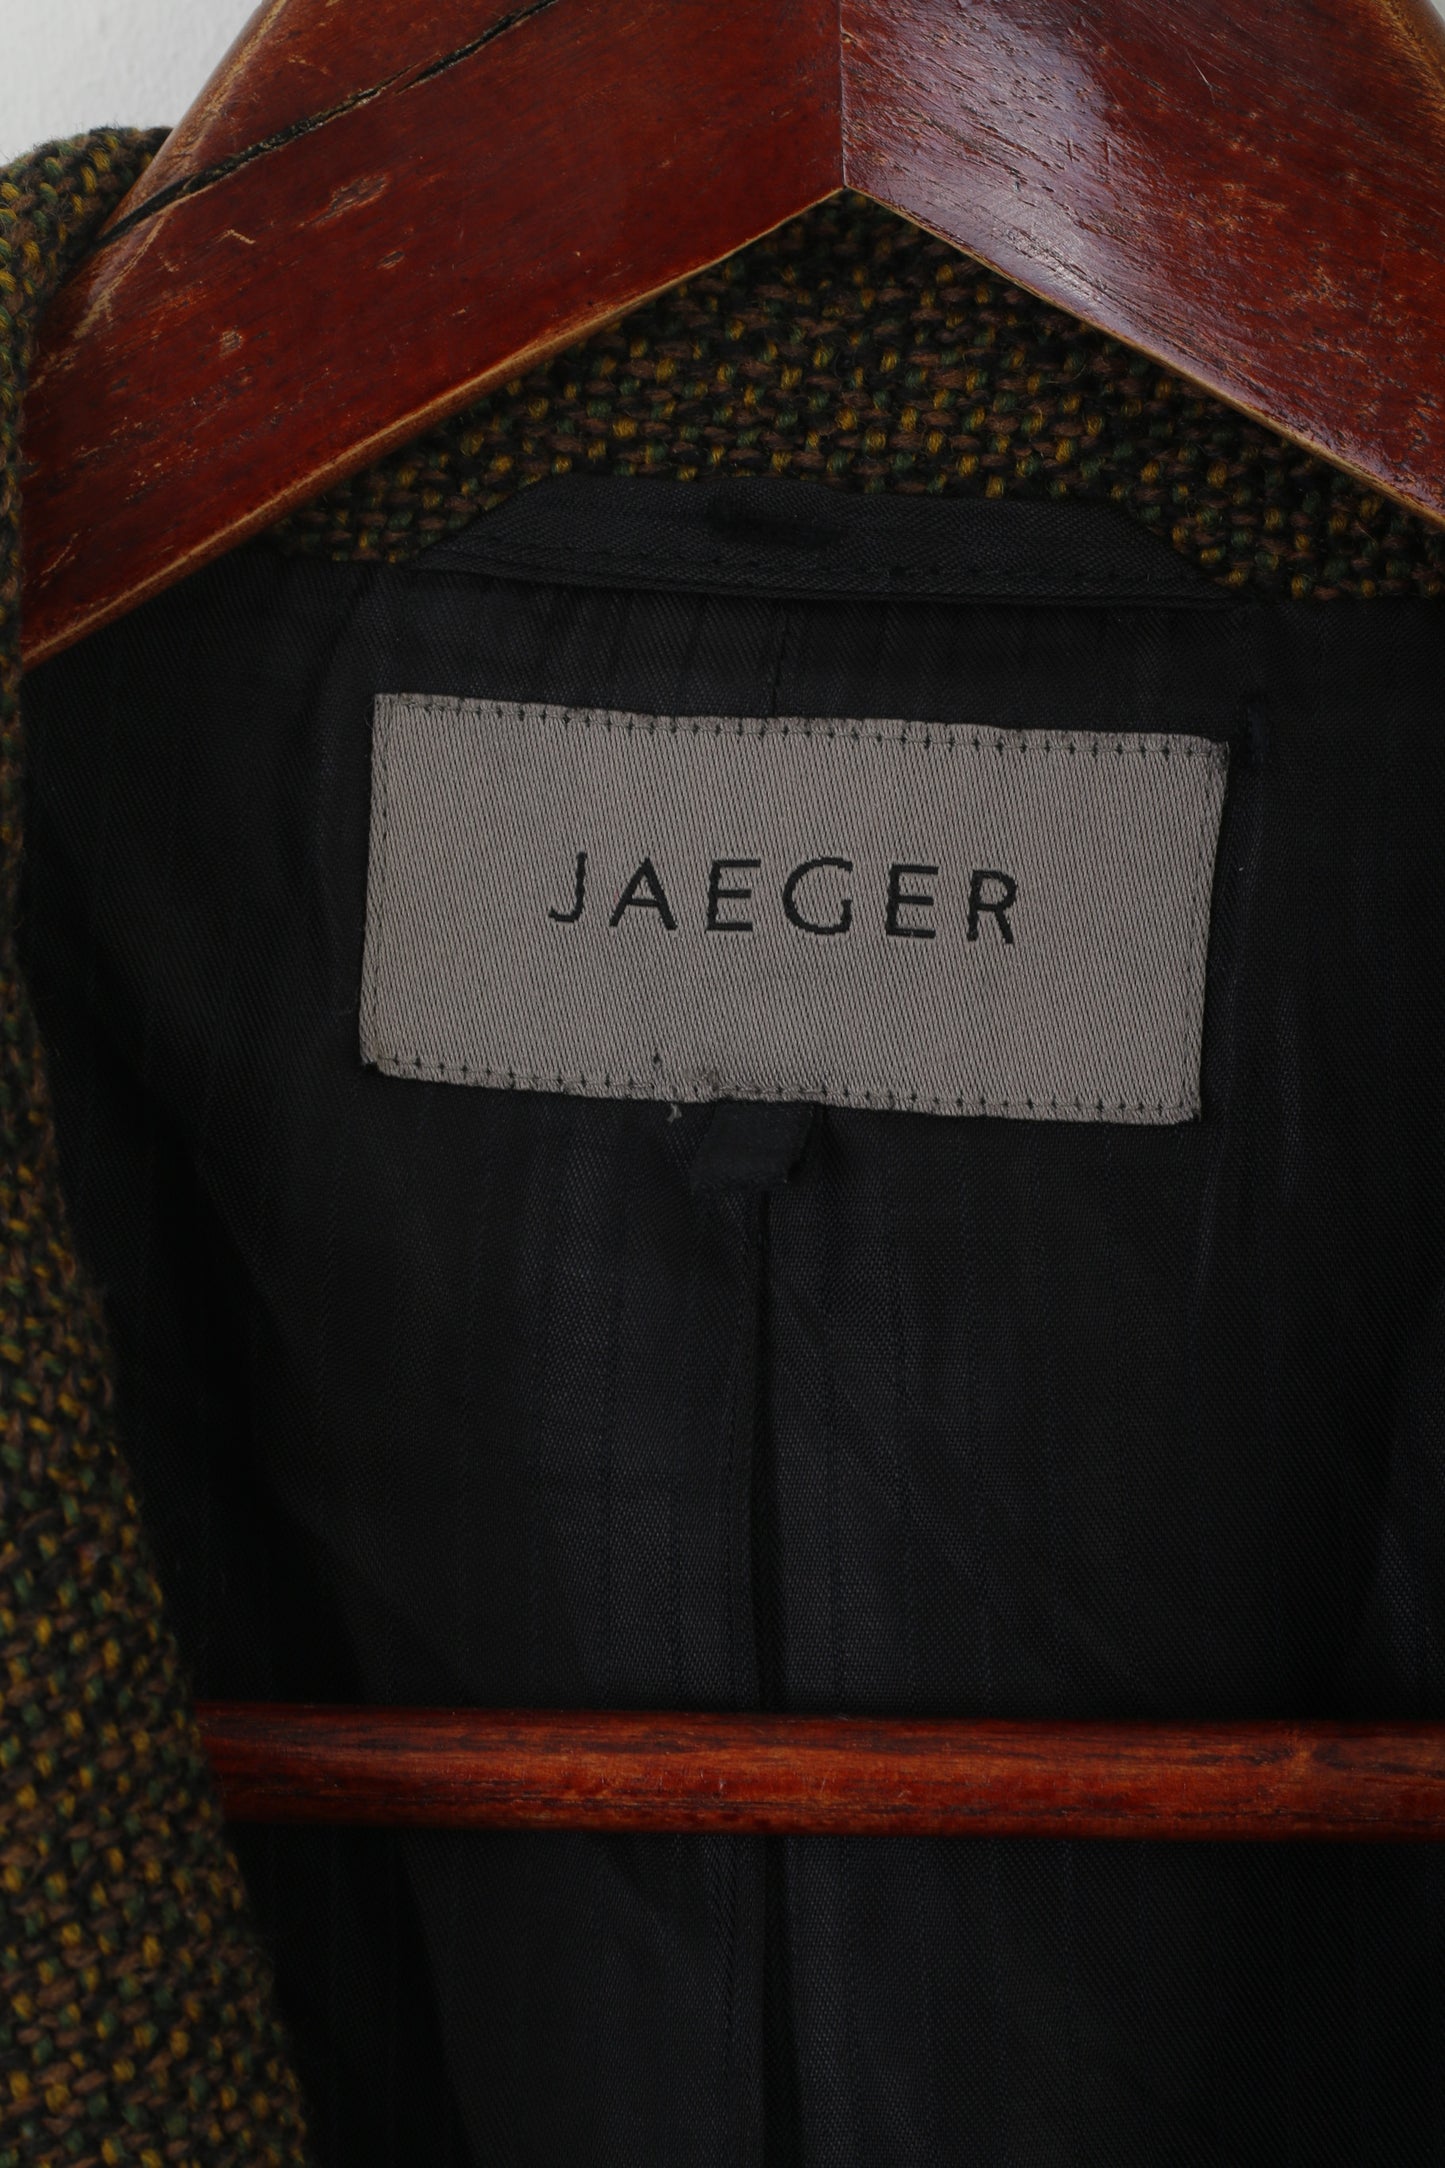 Jaeger Women 16 XL Blazer Green Brown Wool Vintage Shoulder Pads Retro Jacket